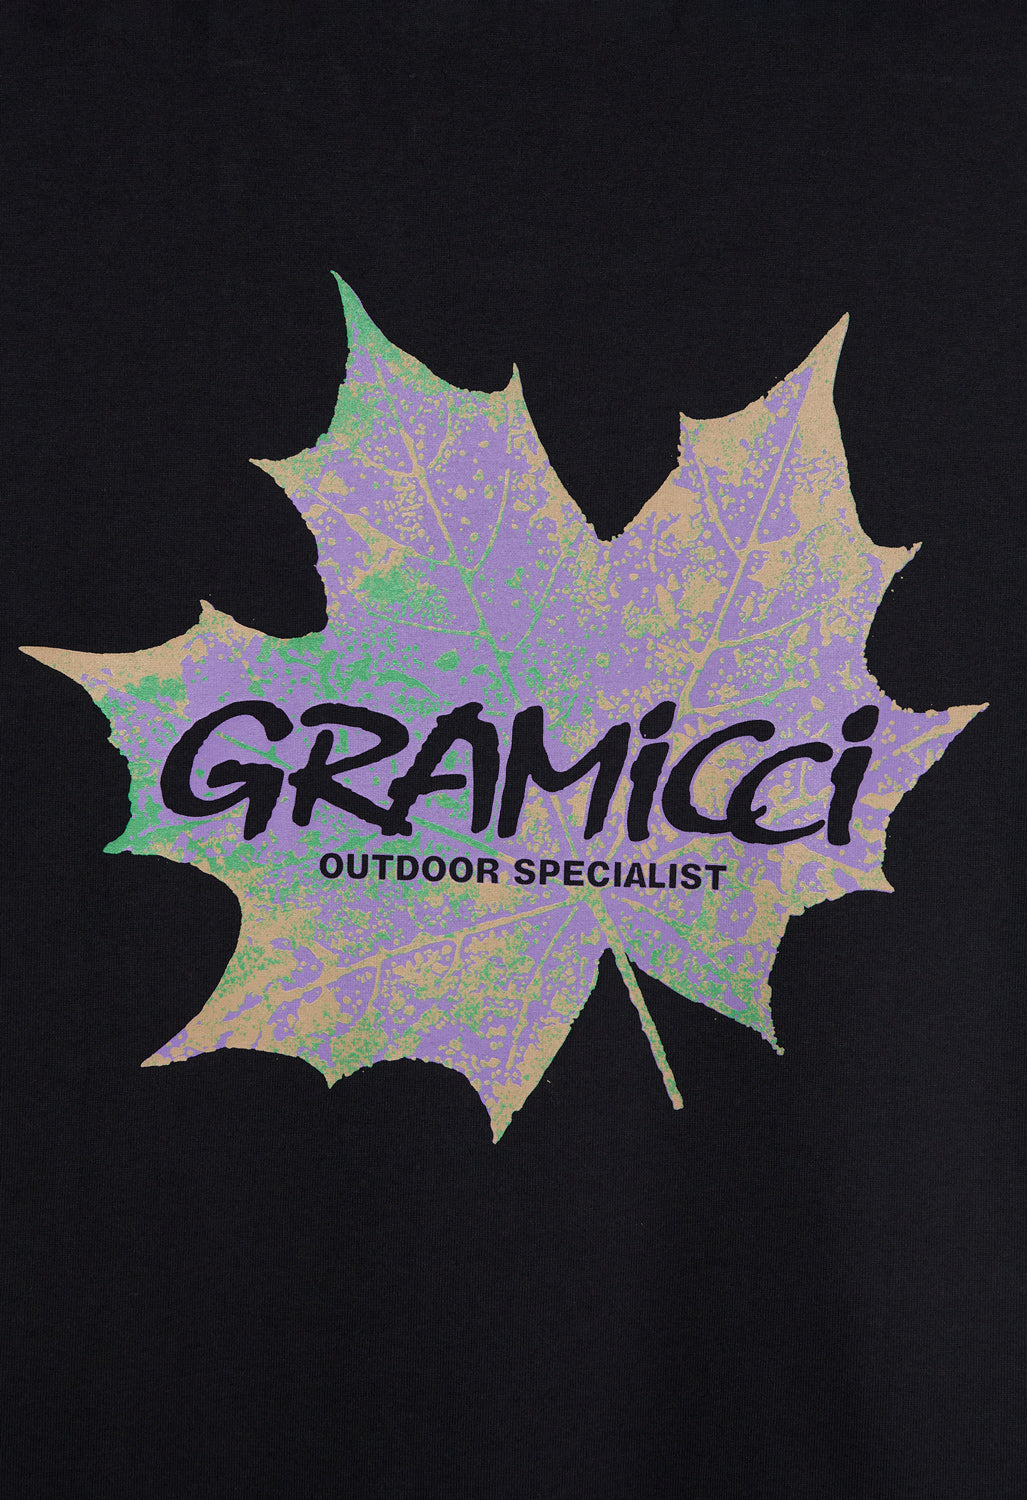 Gramicci Leaf T-Shirt - Black